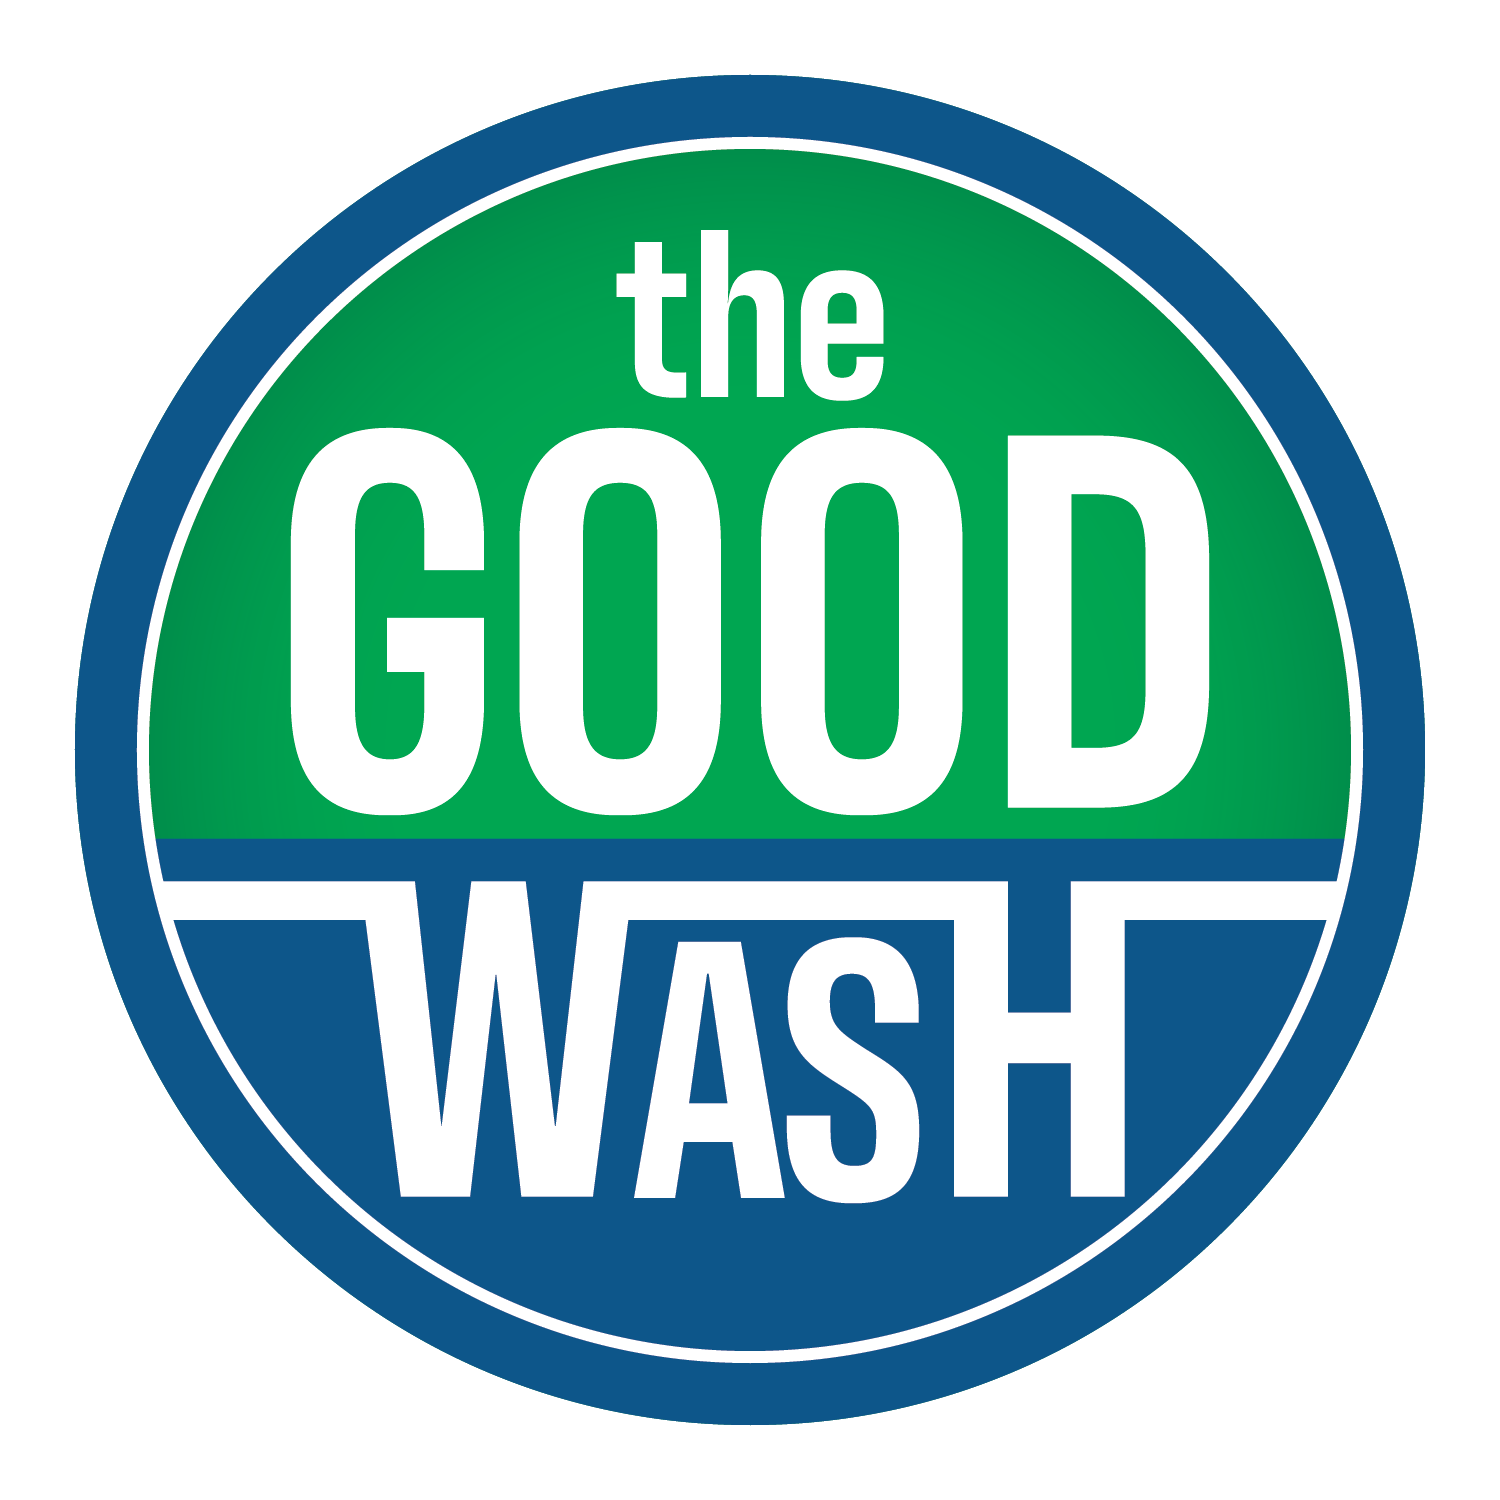 The Good Wash logo